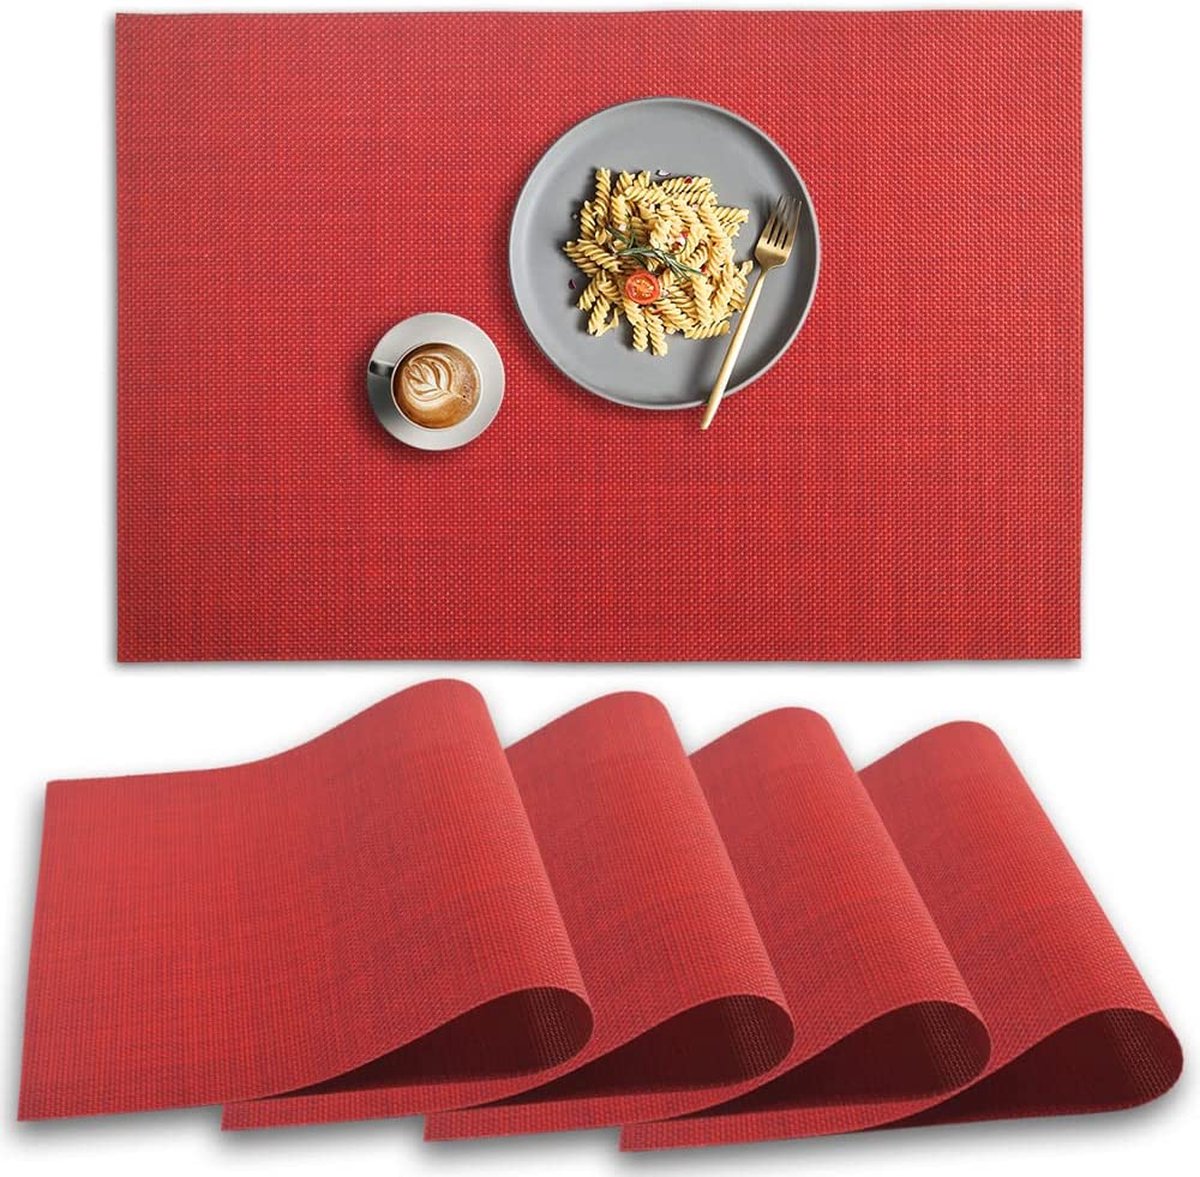 homEdge PVC Placemat, 4 stuks antislip placemats, wasbare vinyl placemats, set van 4 stuks - rood